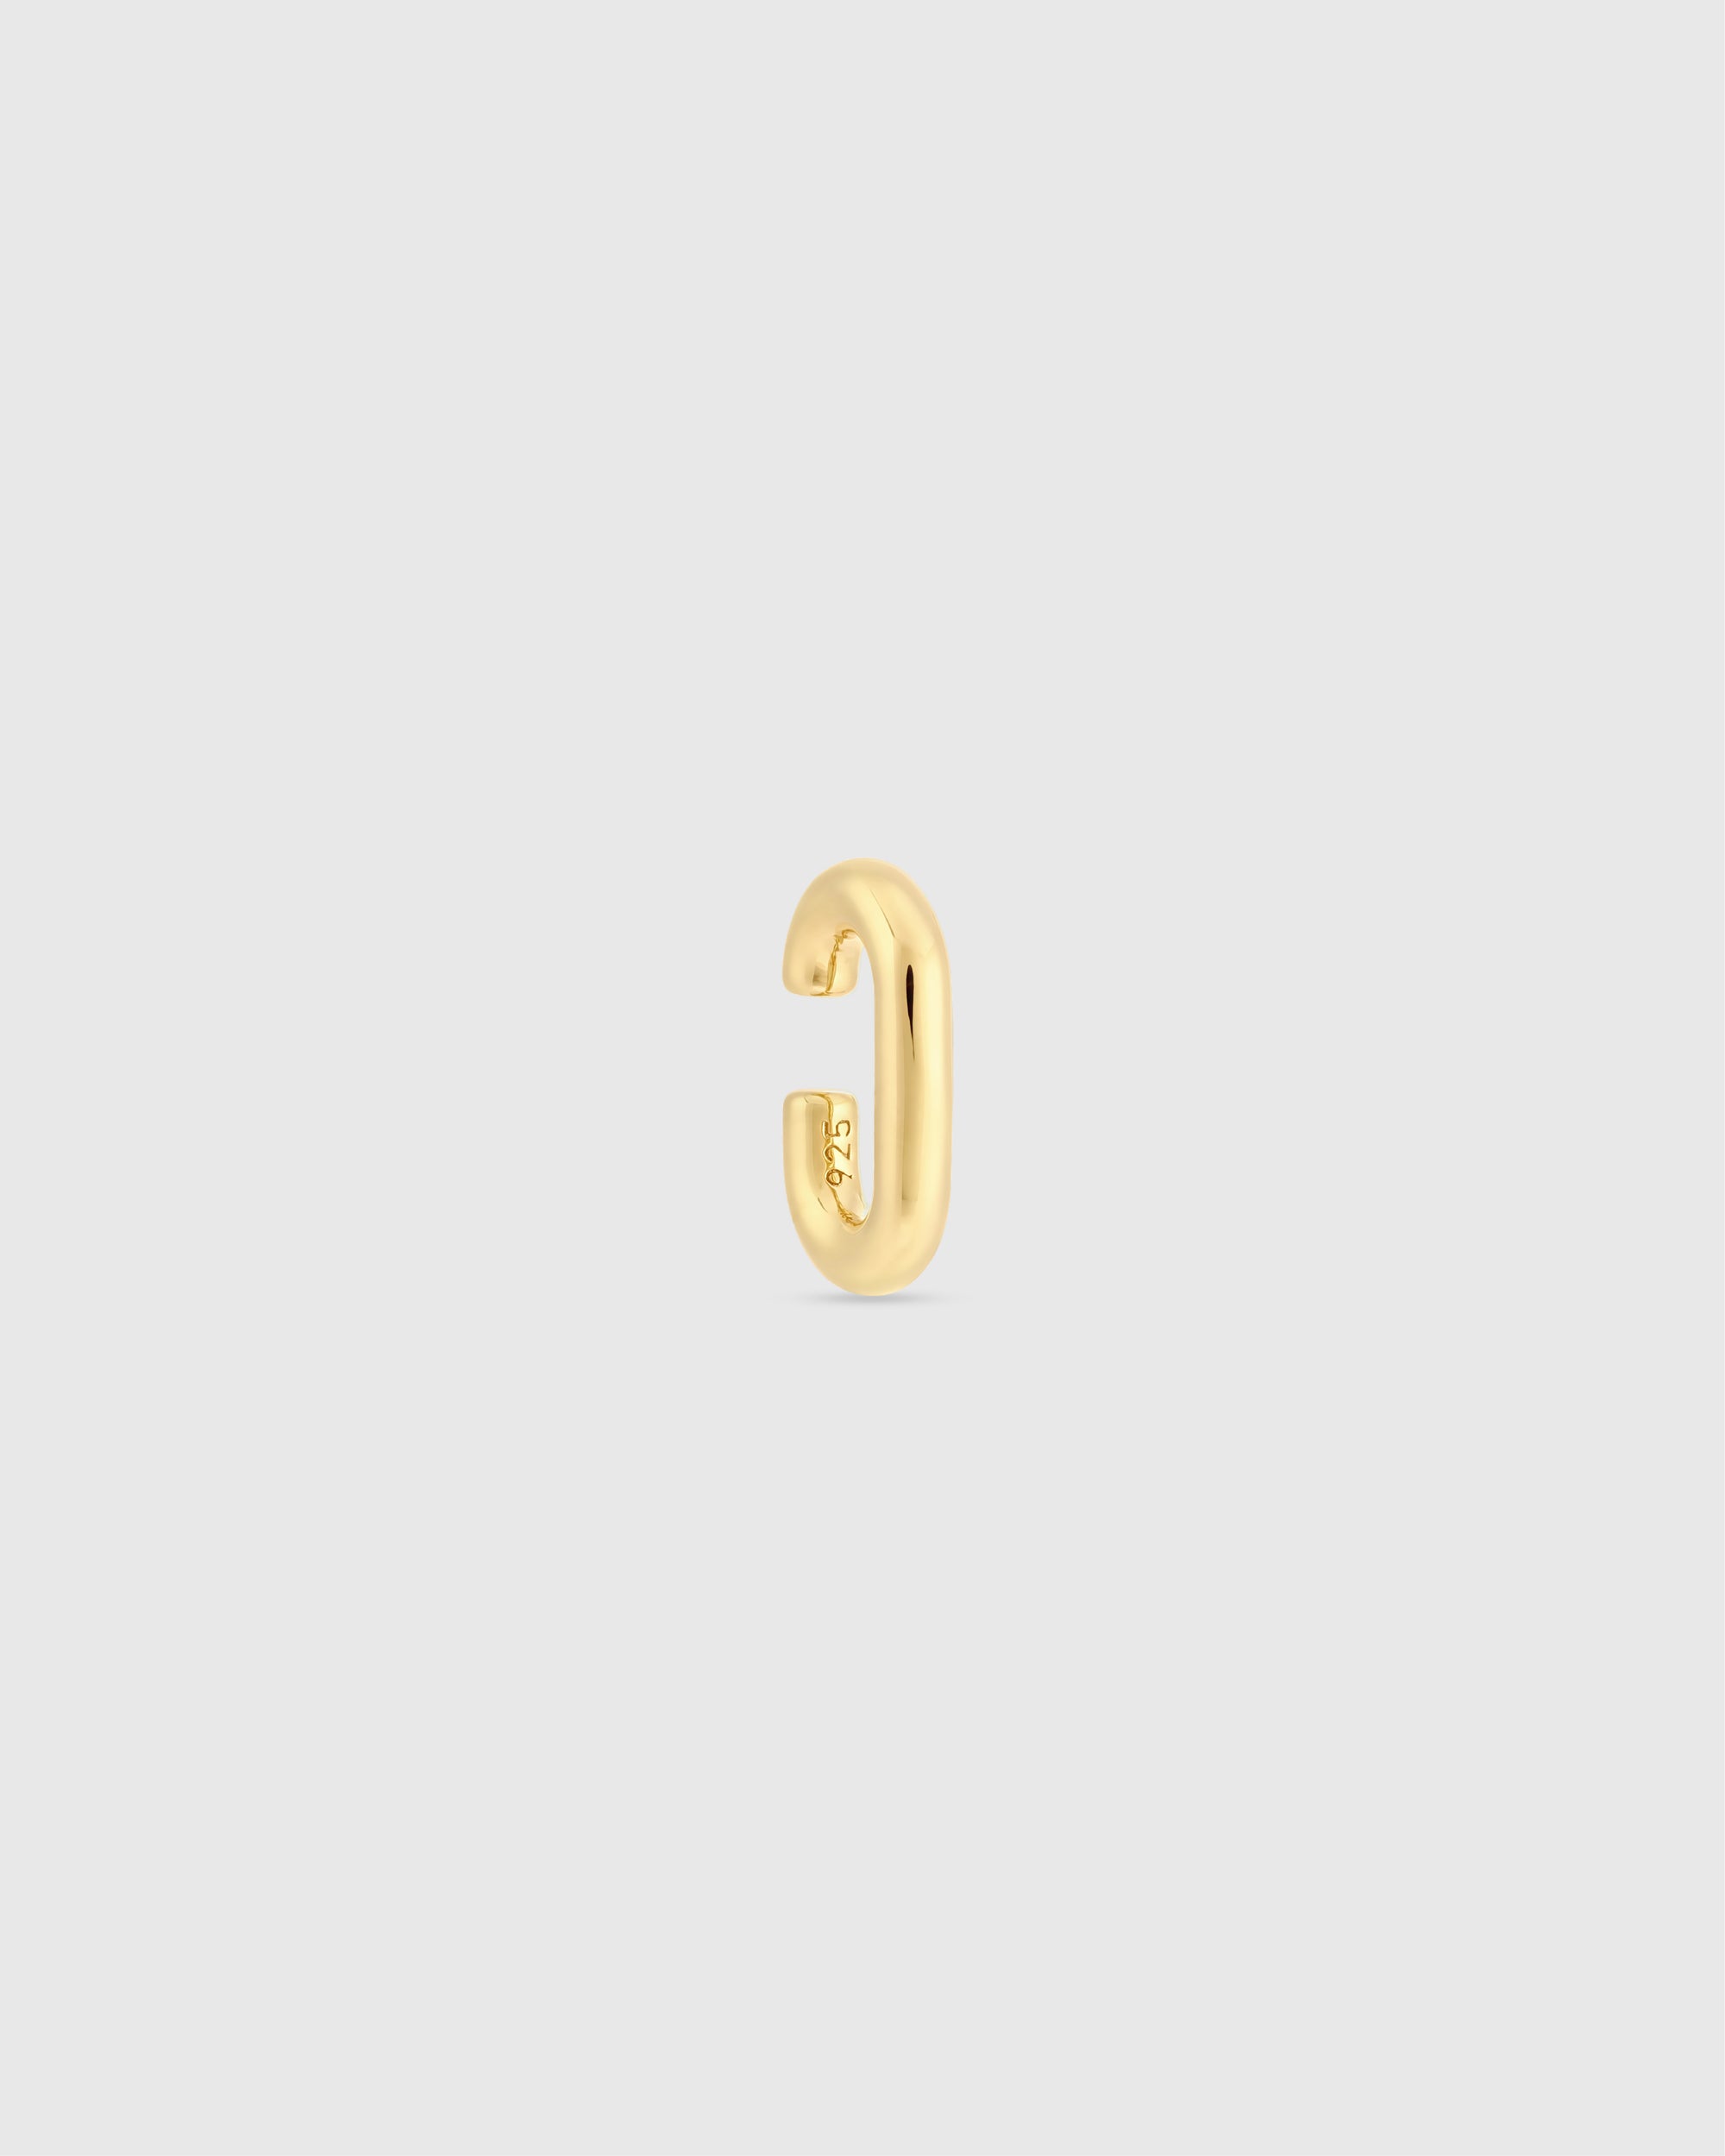 Capsule Long ear cuff in 18k yellow gold vermeil